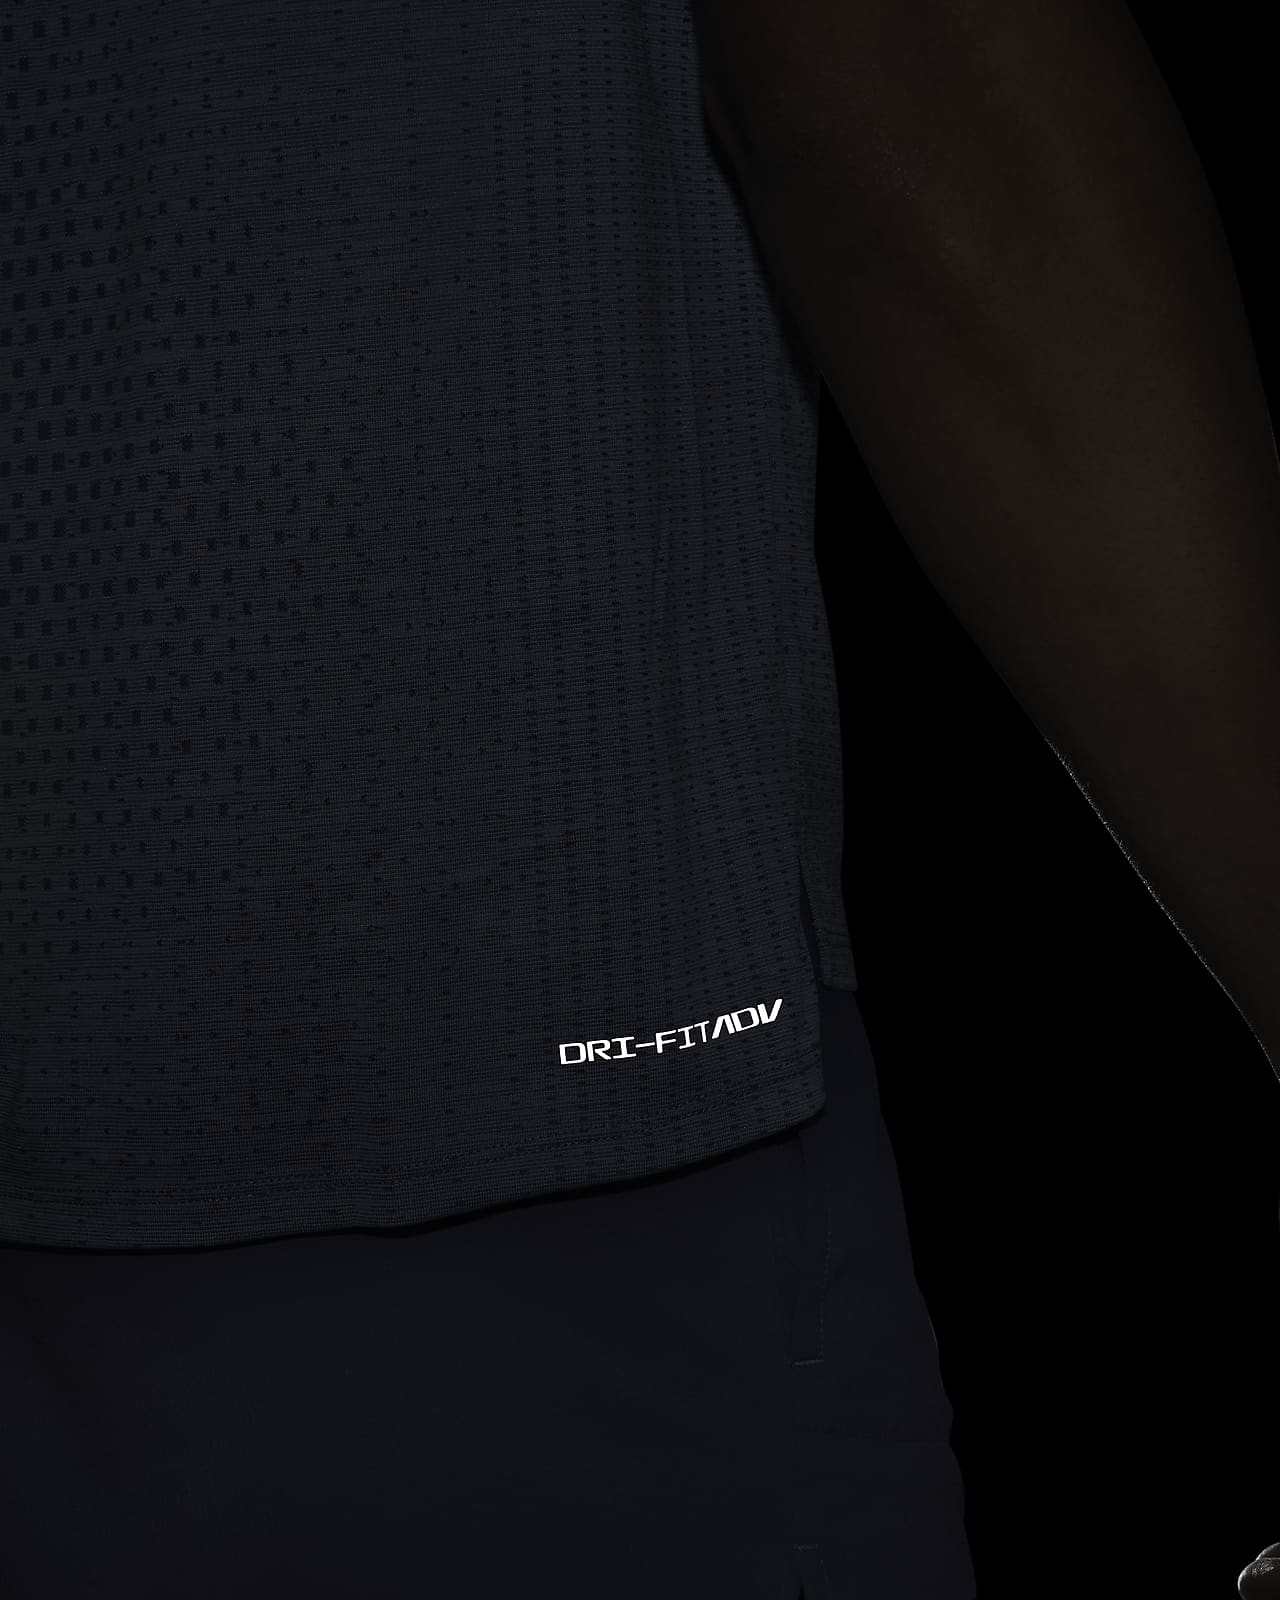 Nike TechKnit Men's Dri-FIT ADV Short-Sleeve Running Top.